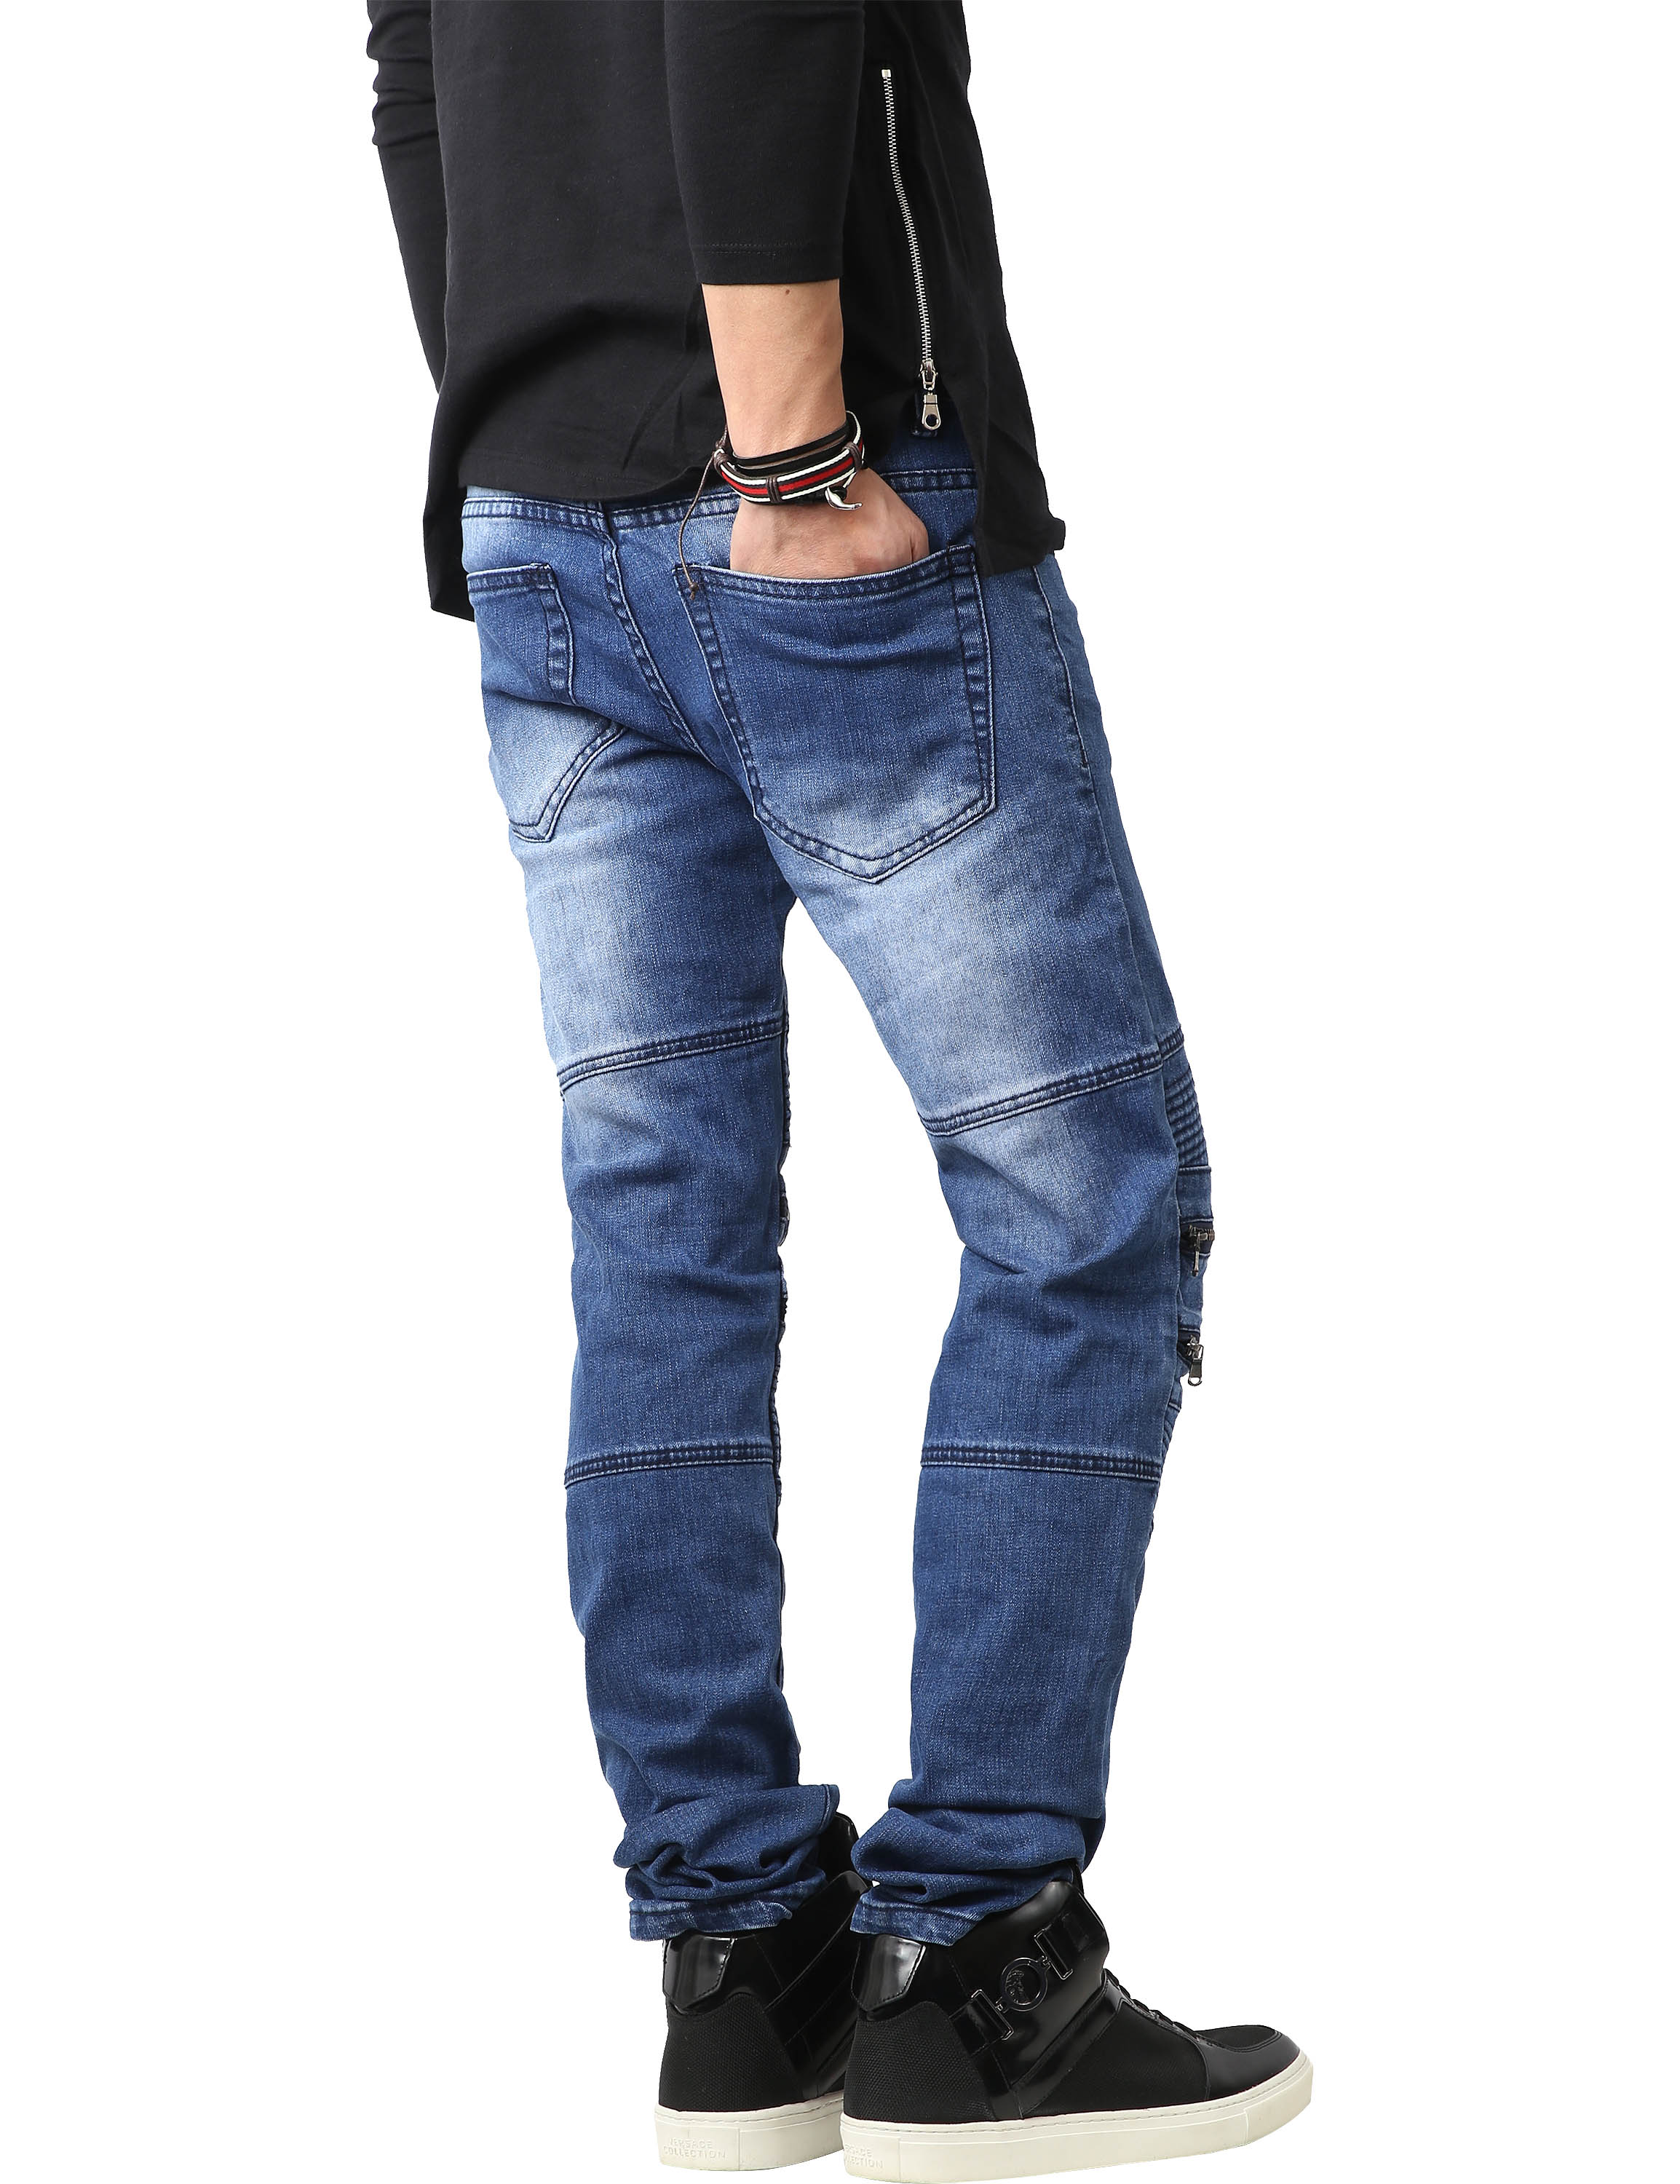 Ma Croix Mens Biker Jeans Distressed Ripped Zipper Straight Slim Fit Stretch Denim Pants - image 4 of 6